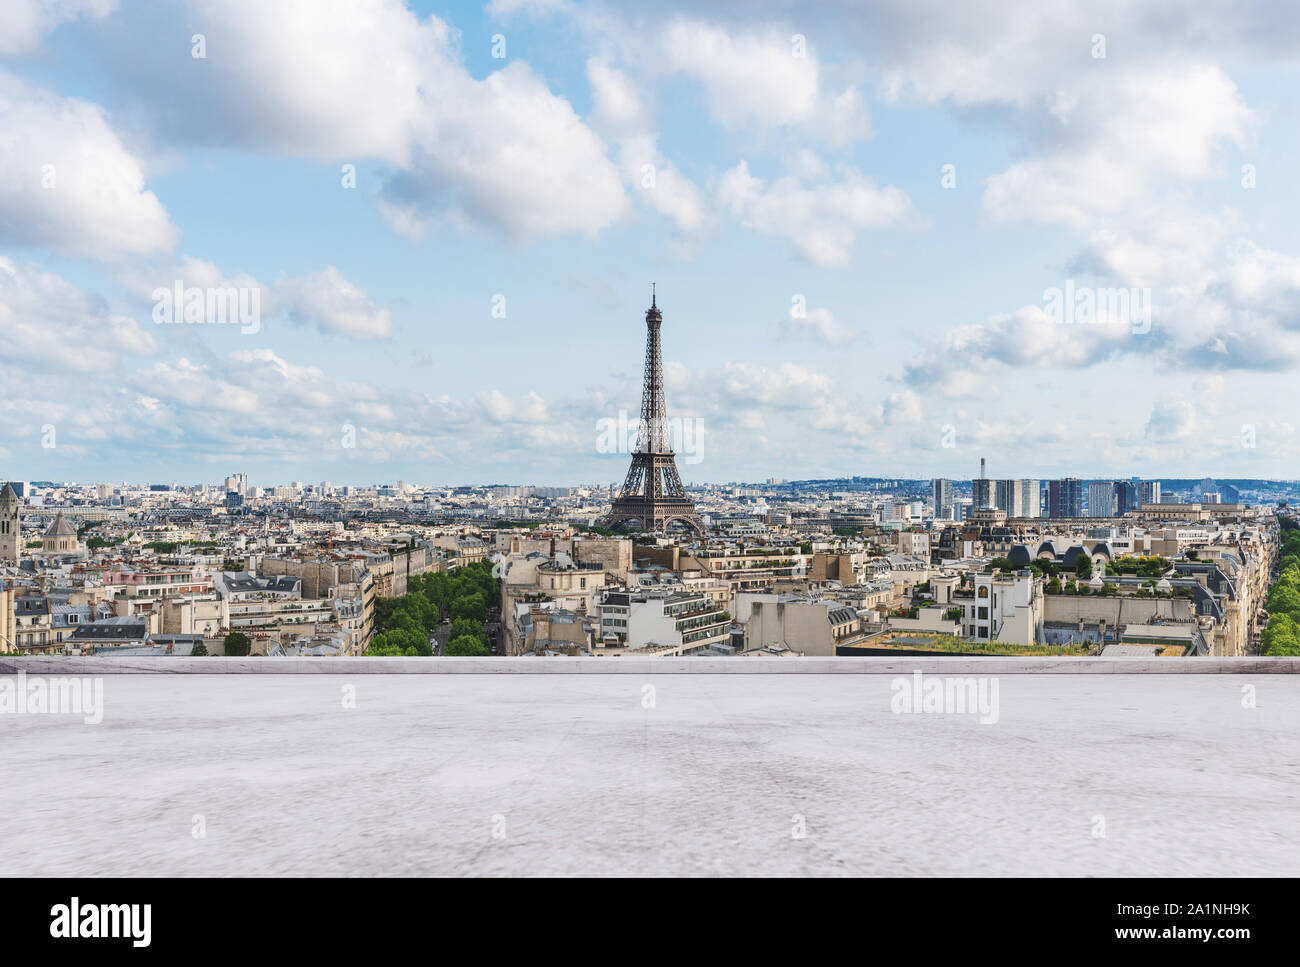 Eiffel tower, famous landmark and travel destination in France, Paris with empty concrete terrace Stock Photo